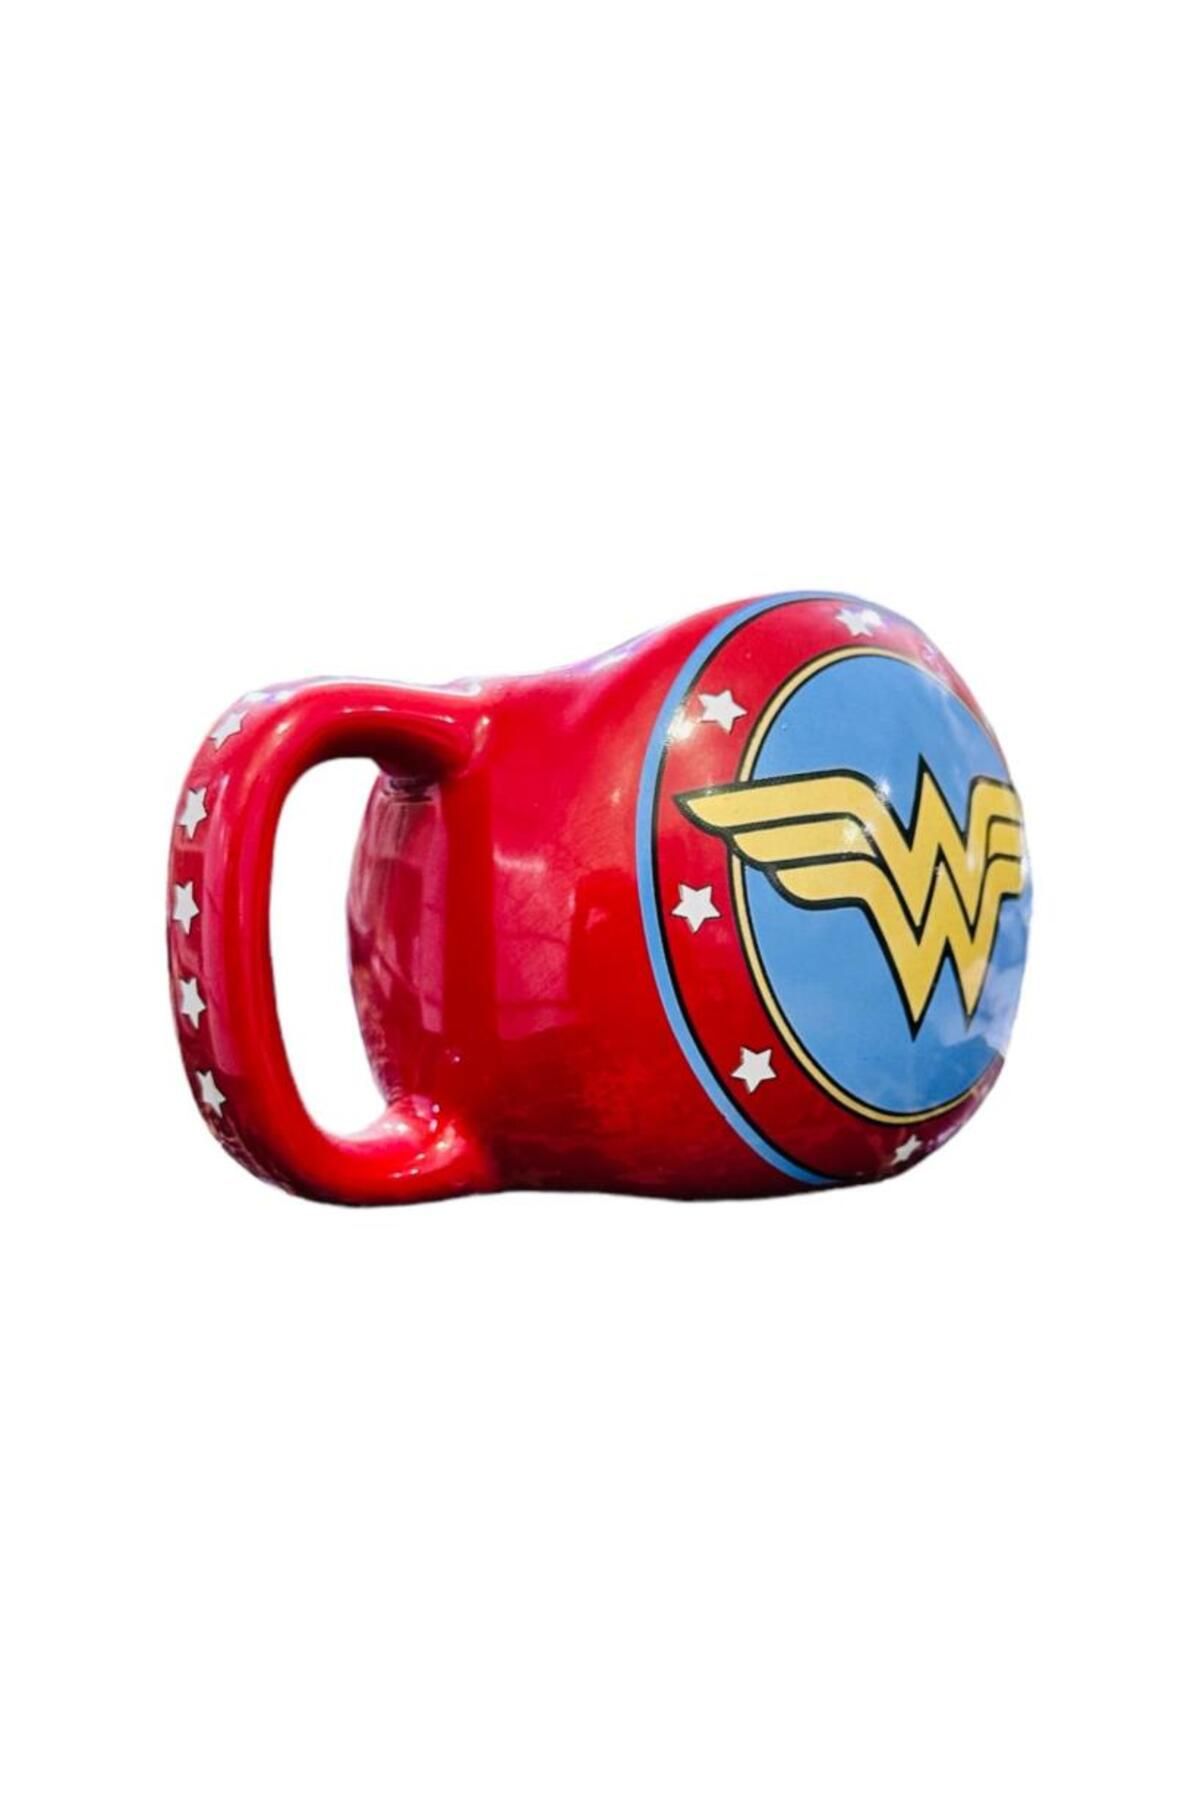 TUTYAKALA Superhero Mug - Wonder Women Kupa - Marvel Kupa Bardak Hediyelik Kupa - Masa Üstü Kalemlik